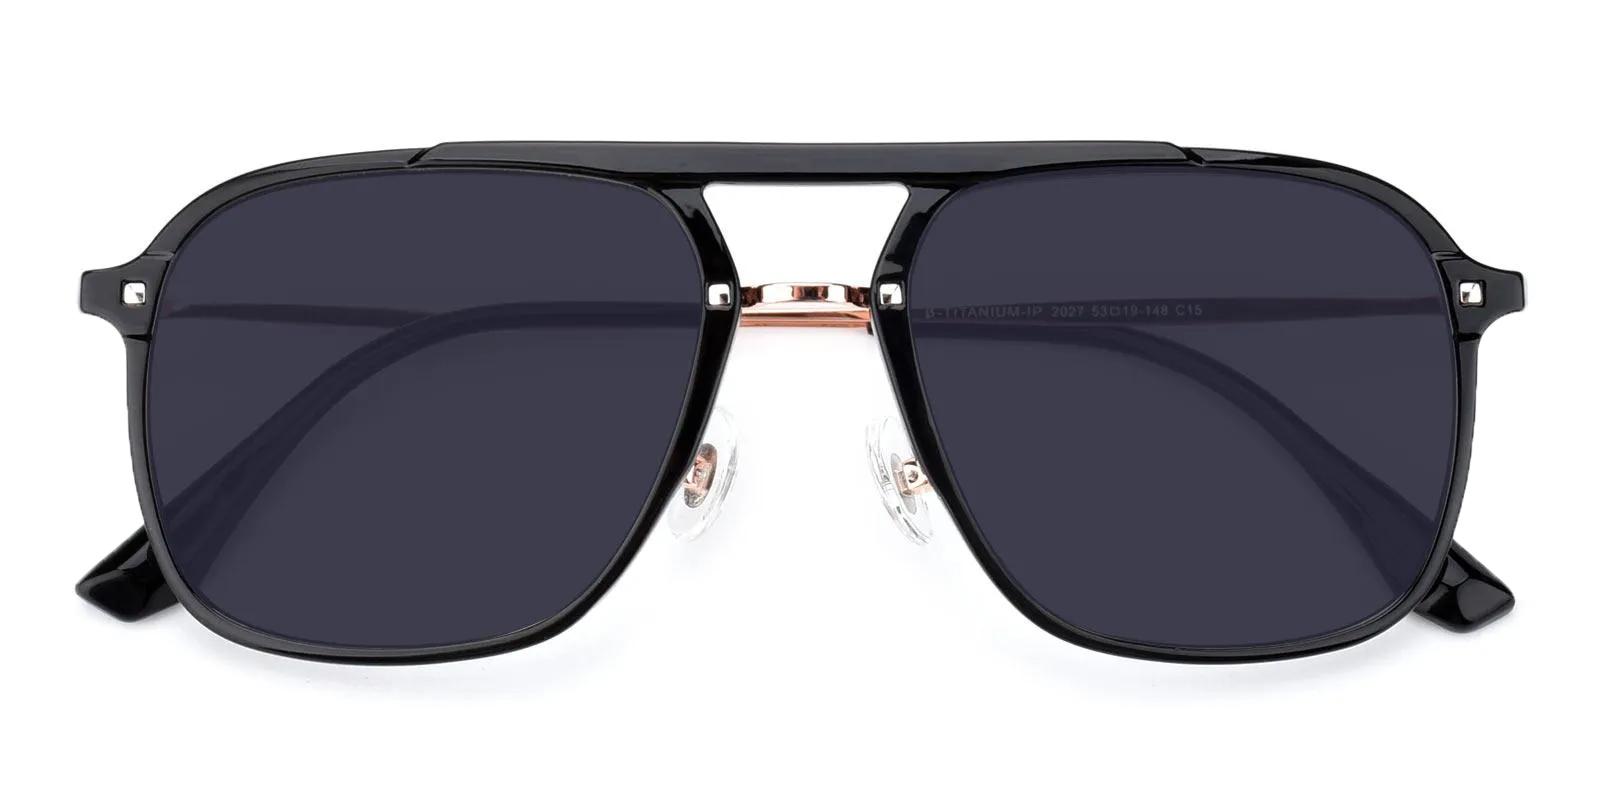 Picard Black Titanium , TR NosePads , Sunglasses Frames from ABBE Glasses